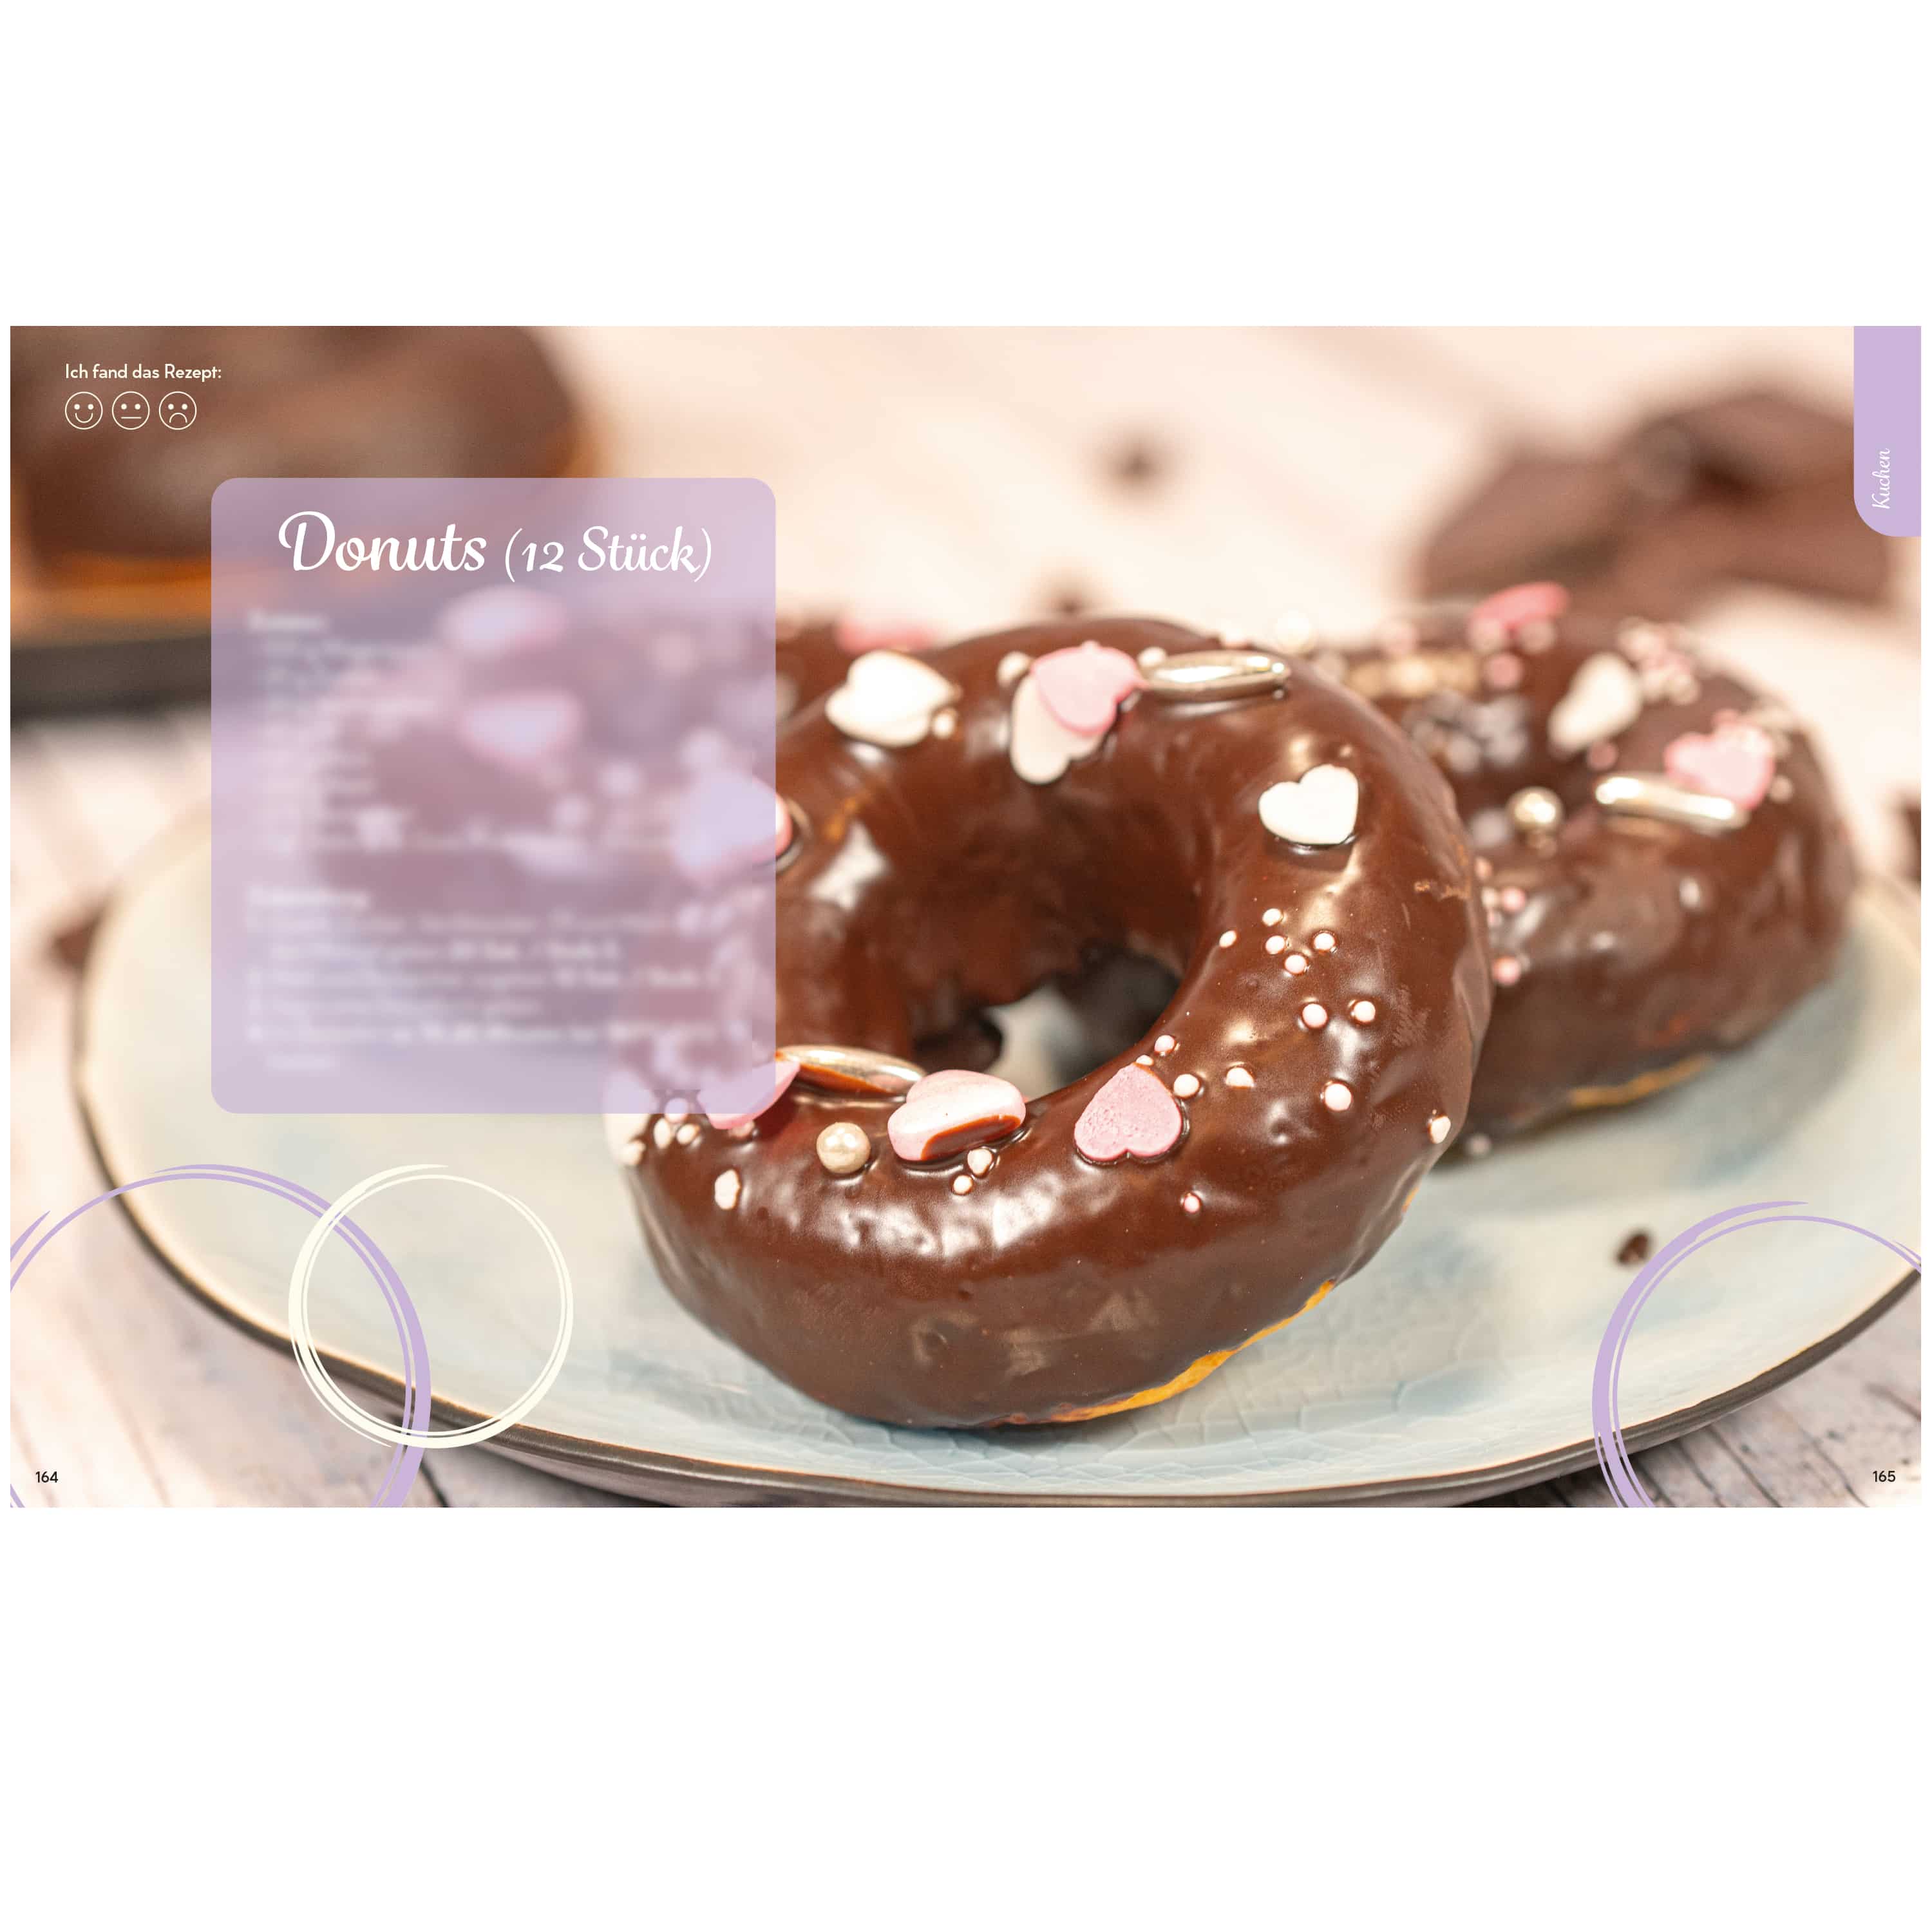 rzm-grundrezepte-listing-donuts